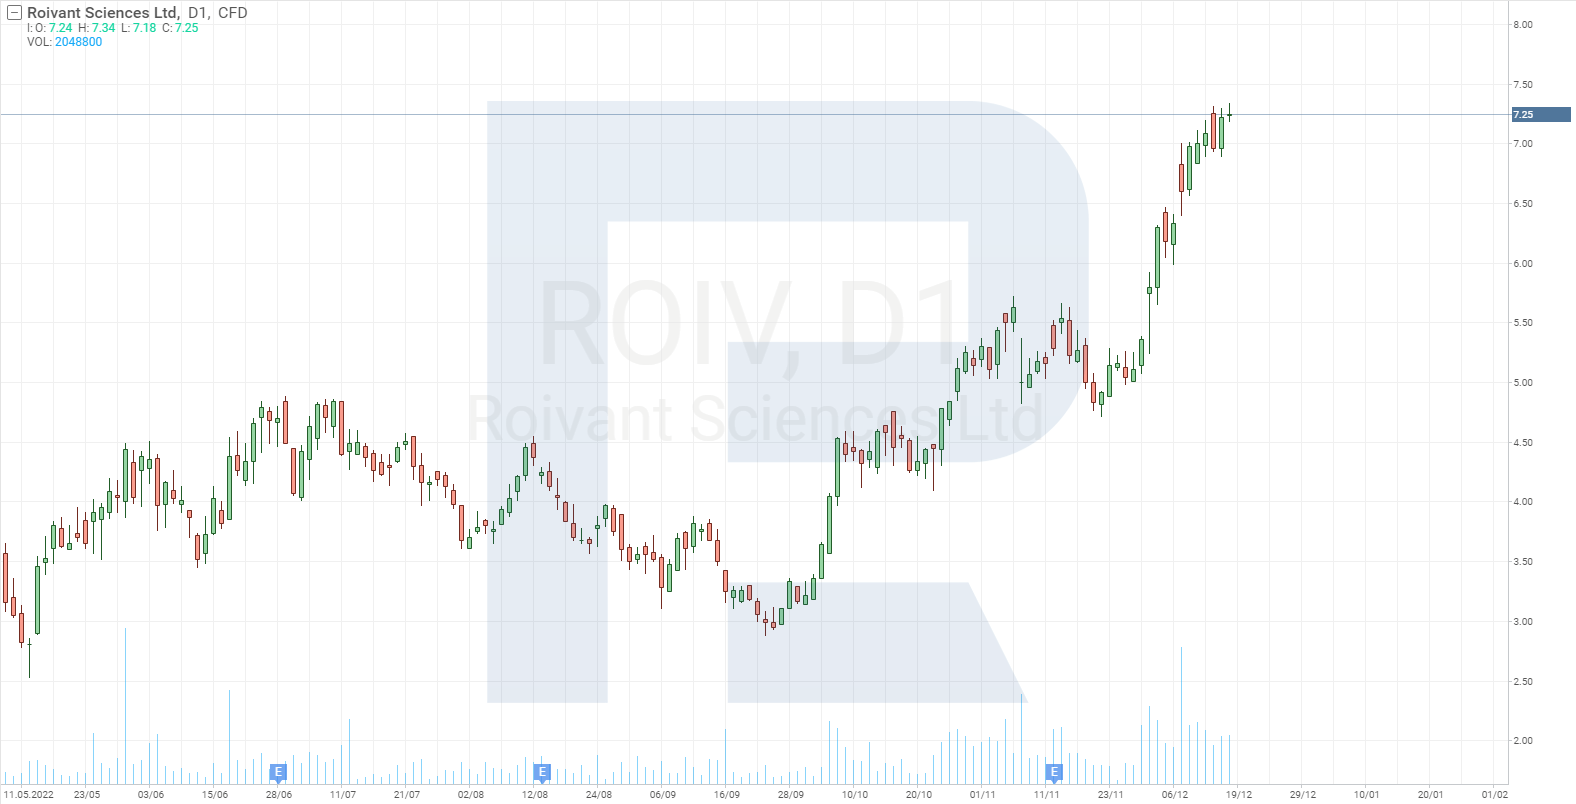 Stock price chart of Roivant Sciences